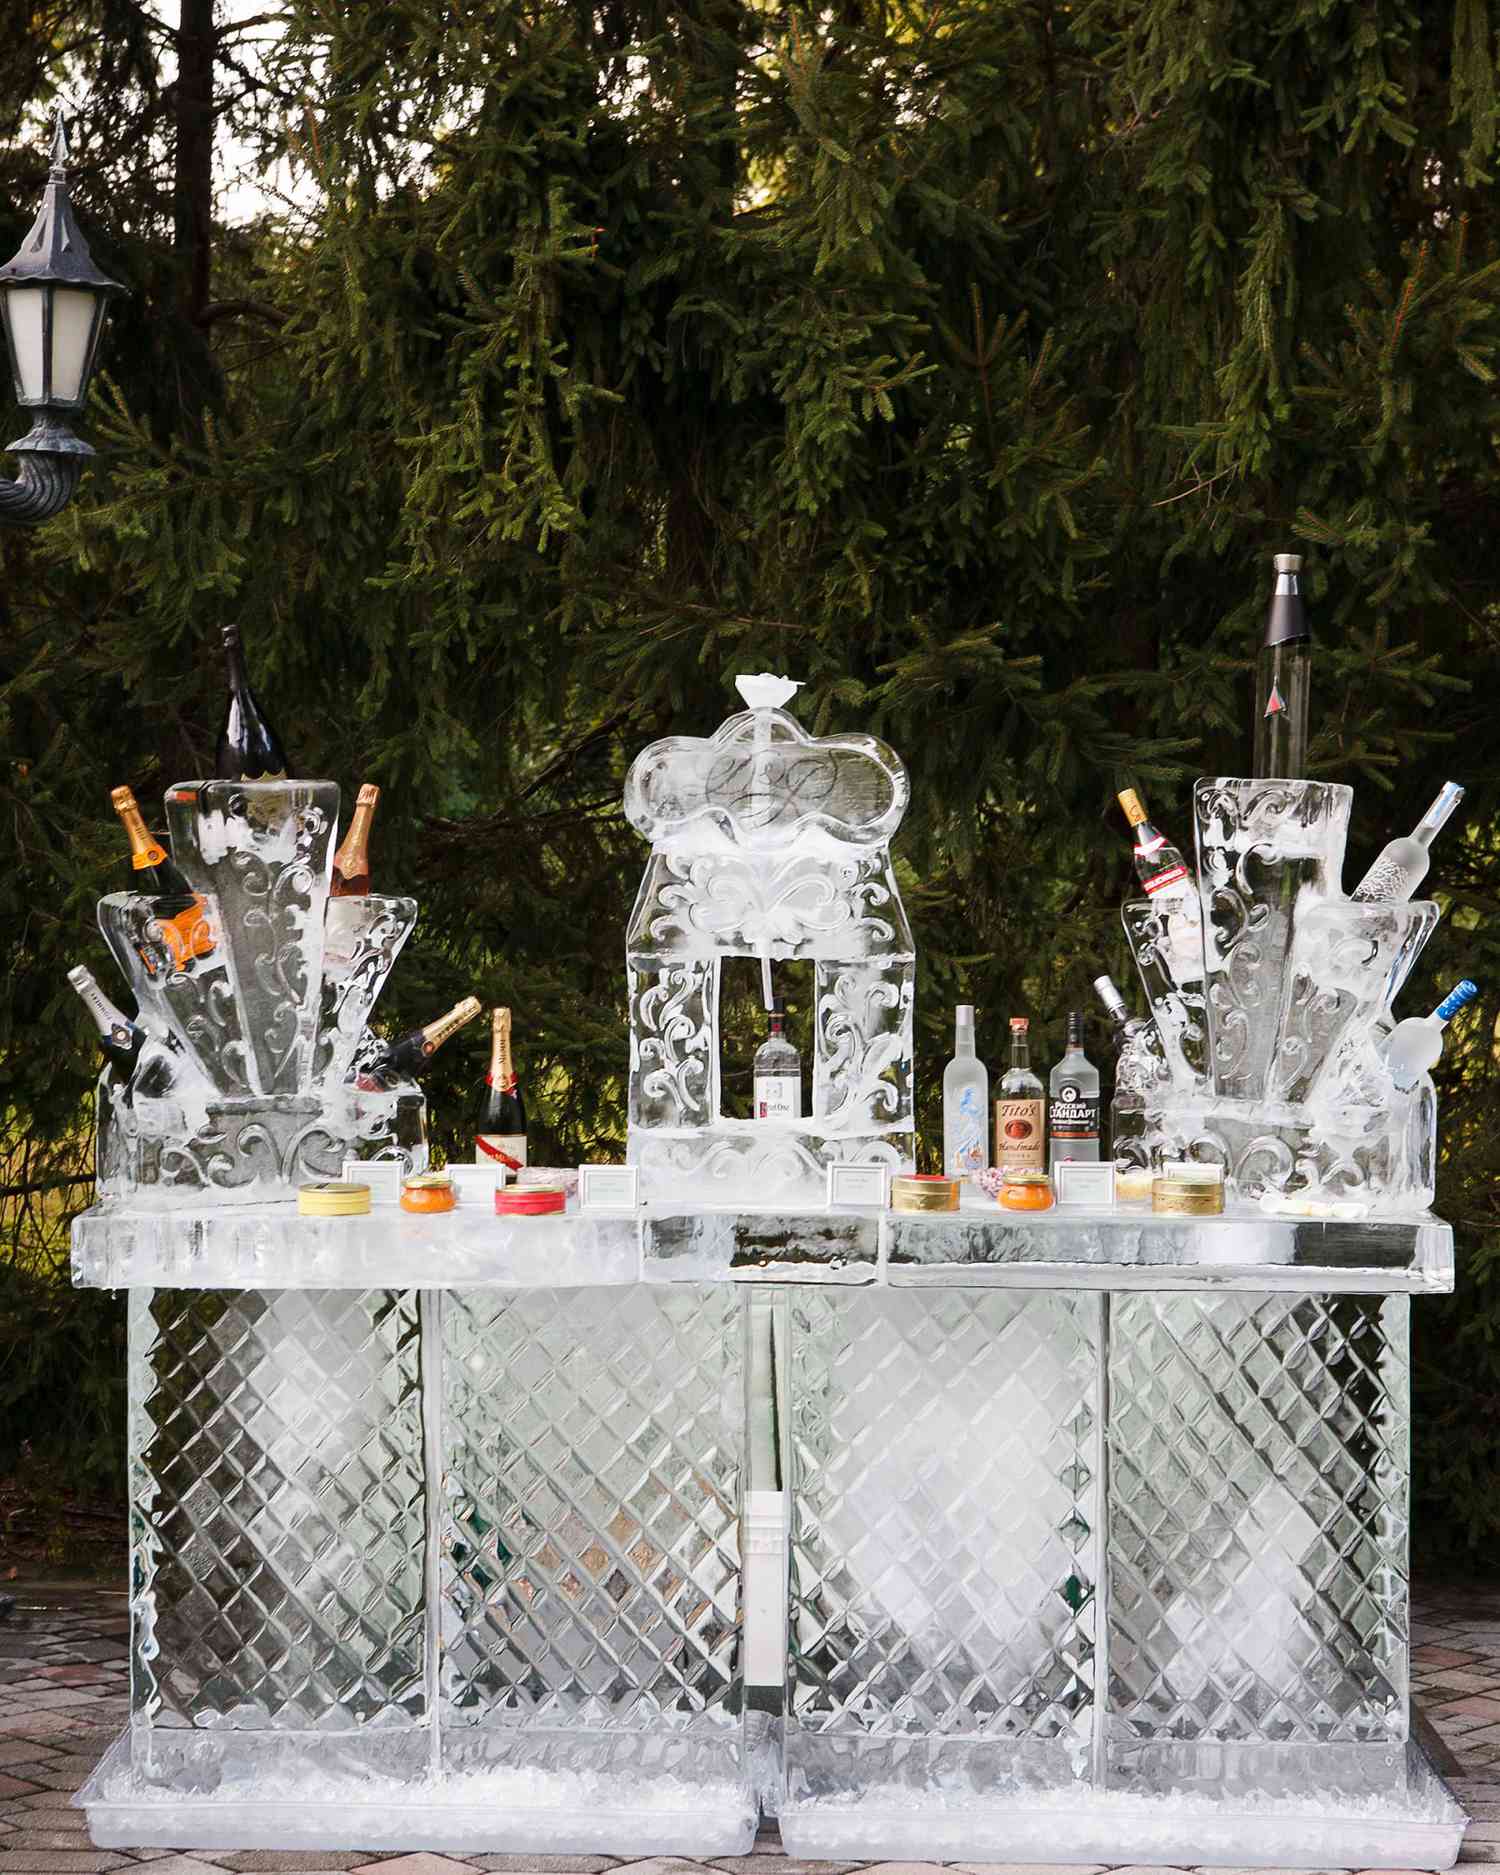 Intricate ice sculpture centerpiece at a wedding